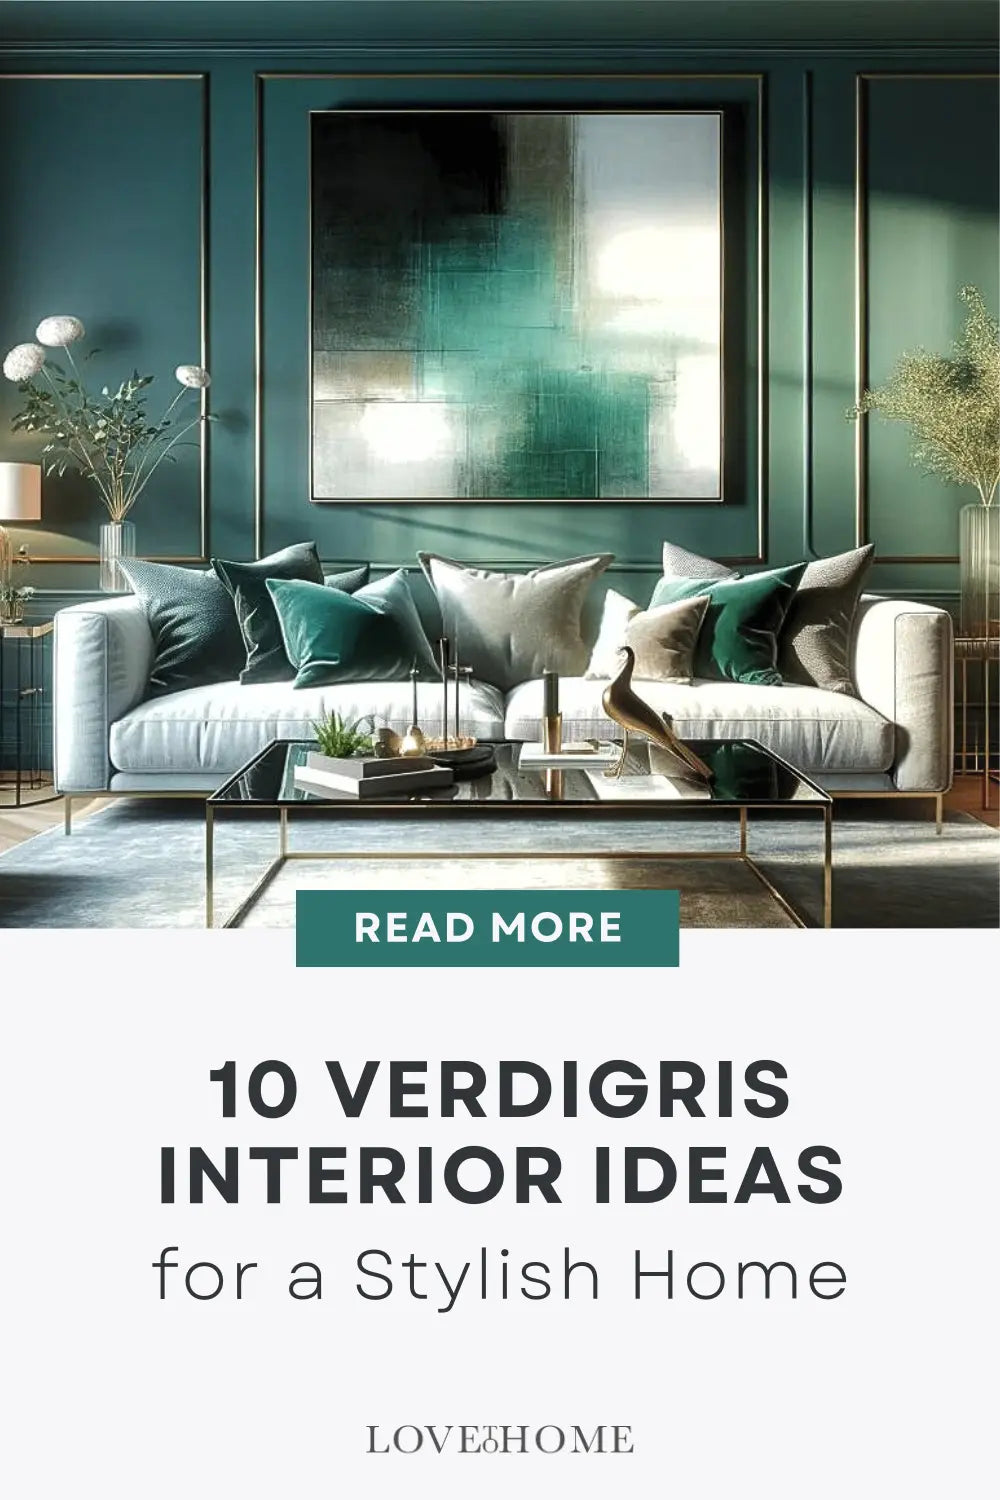 10 Verdigris Interior Ideas for a Stylish Home